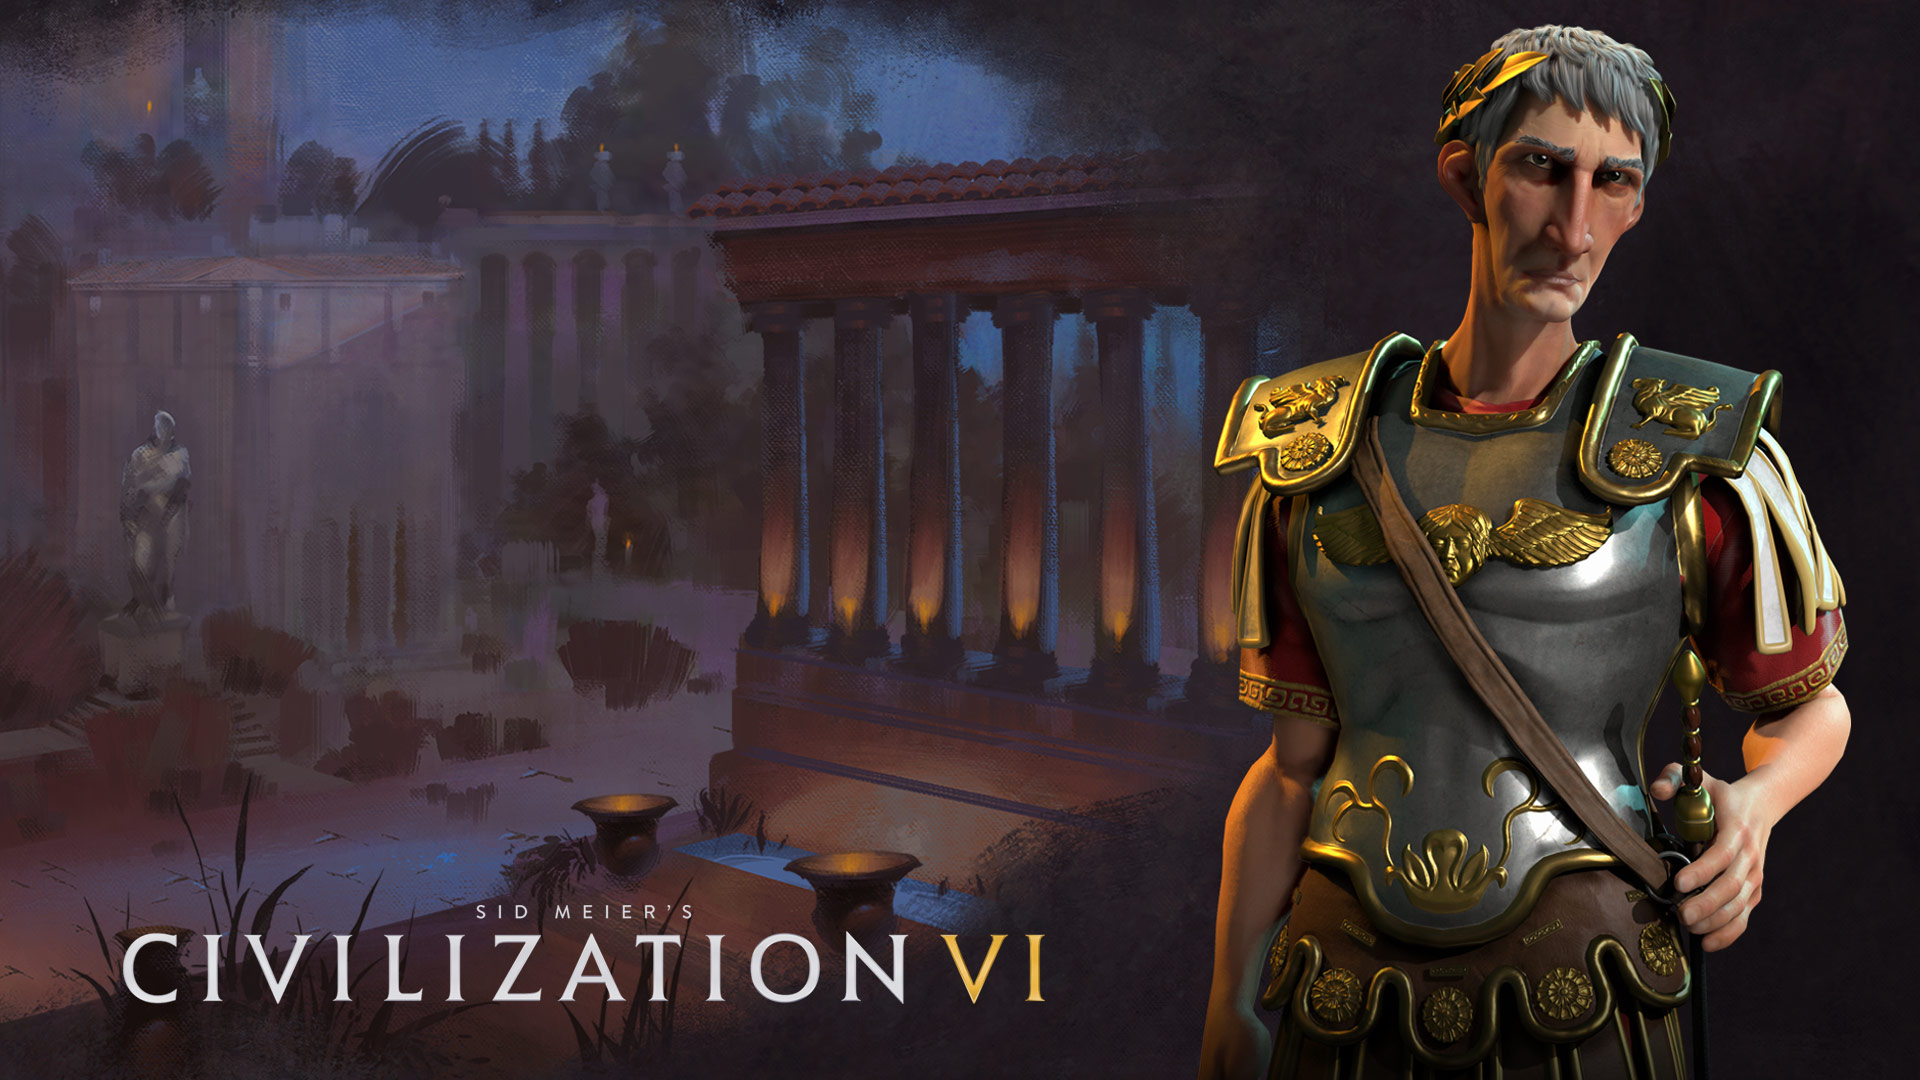 civ 6 civilizations list